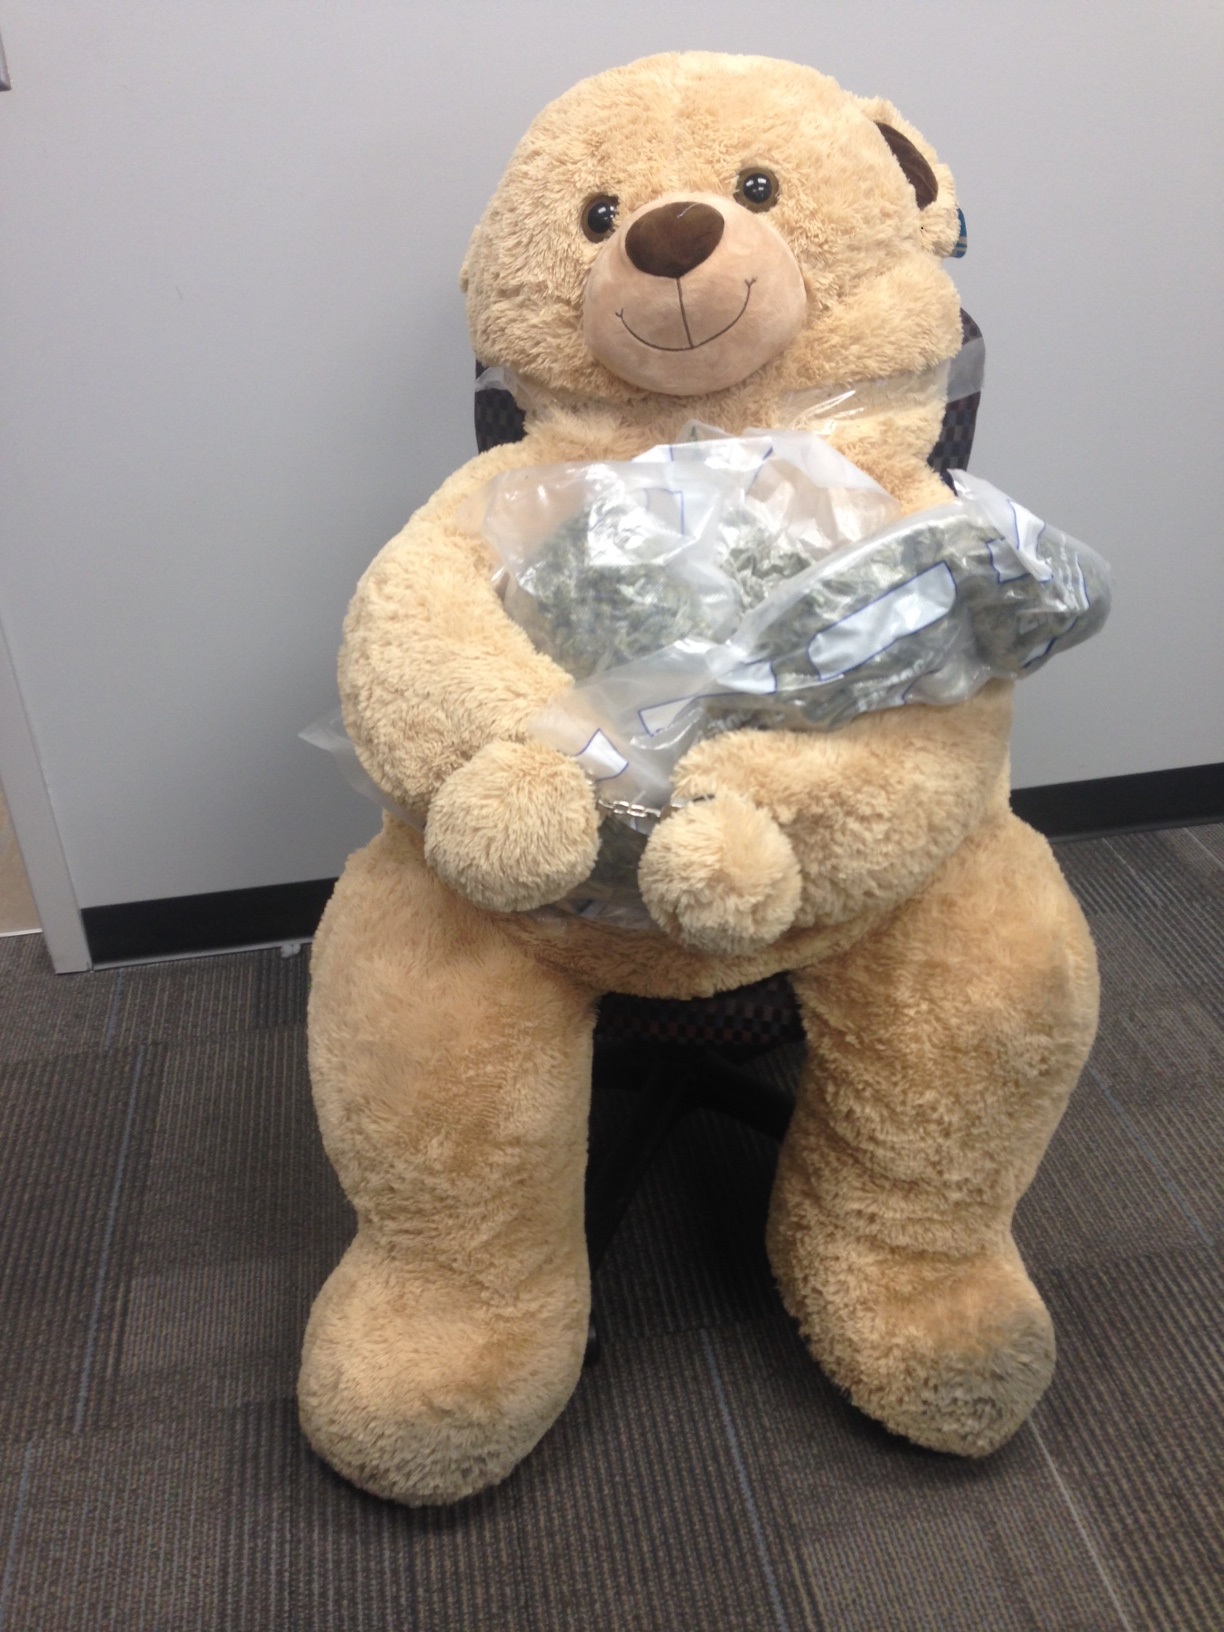 Deputies Find Marijuana Inside Teddy Bear | KFOR FM 103.3 1240 AM